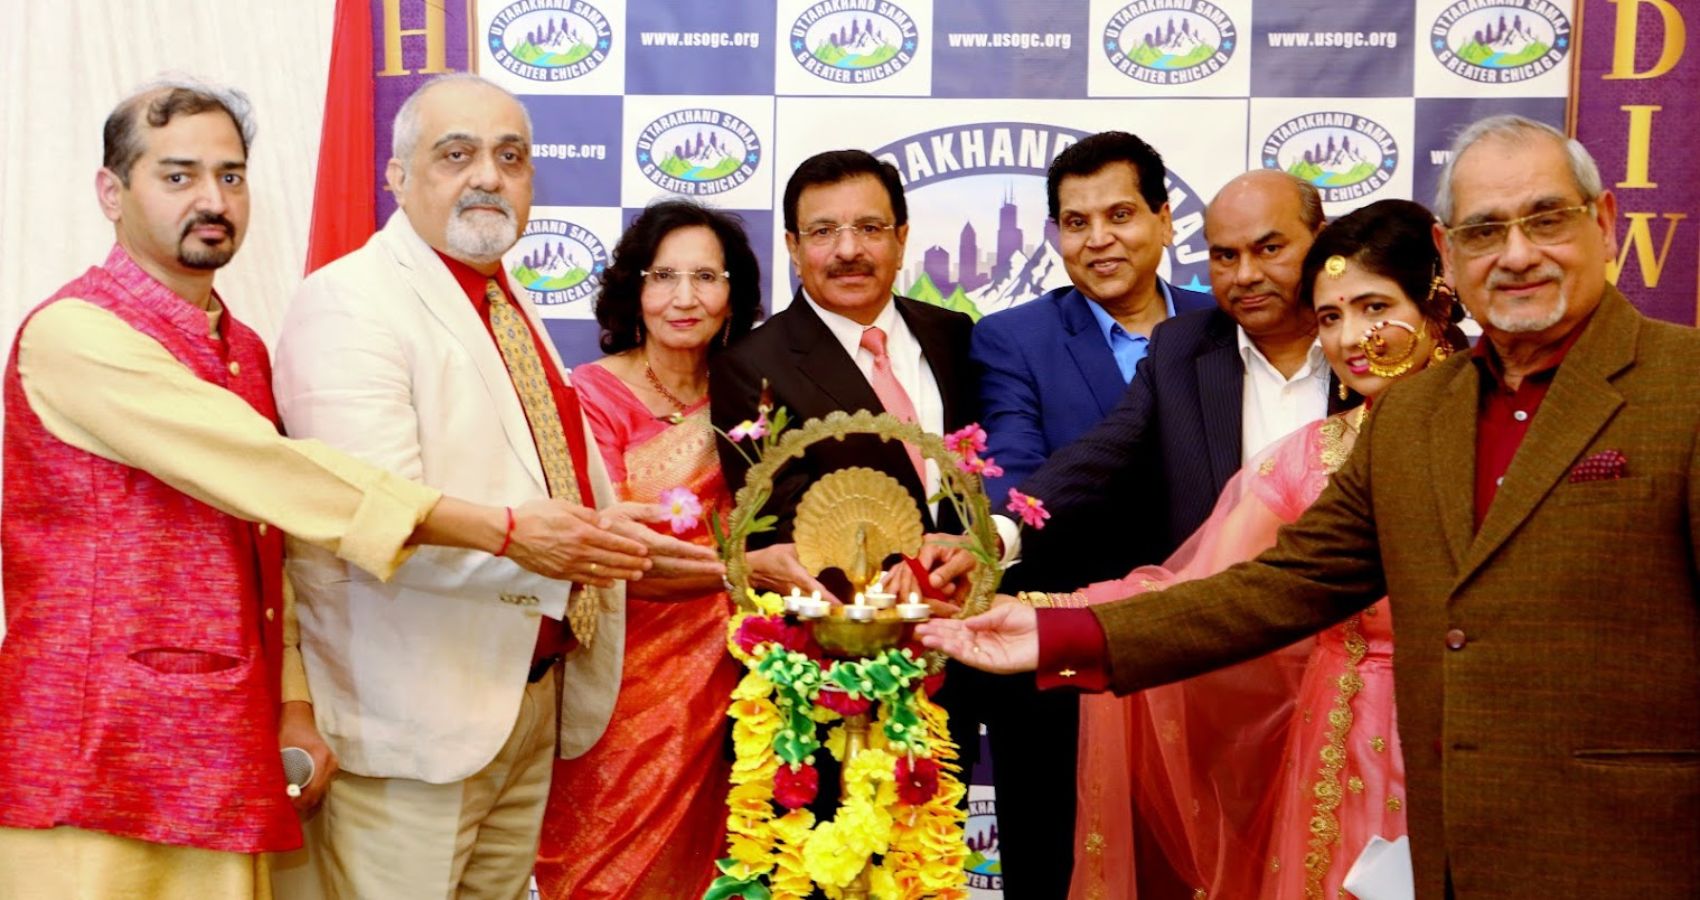 Uttarakhand Samaj Of Greater Chicago Hosts Grand Deepavali Celebrations